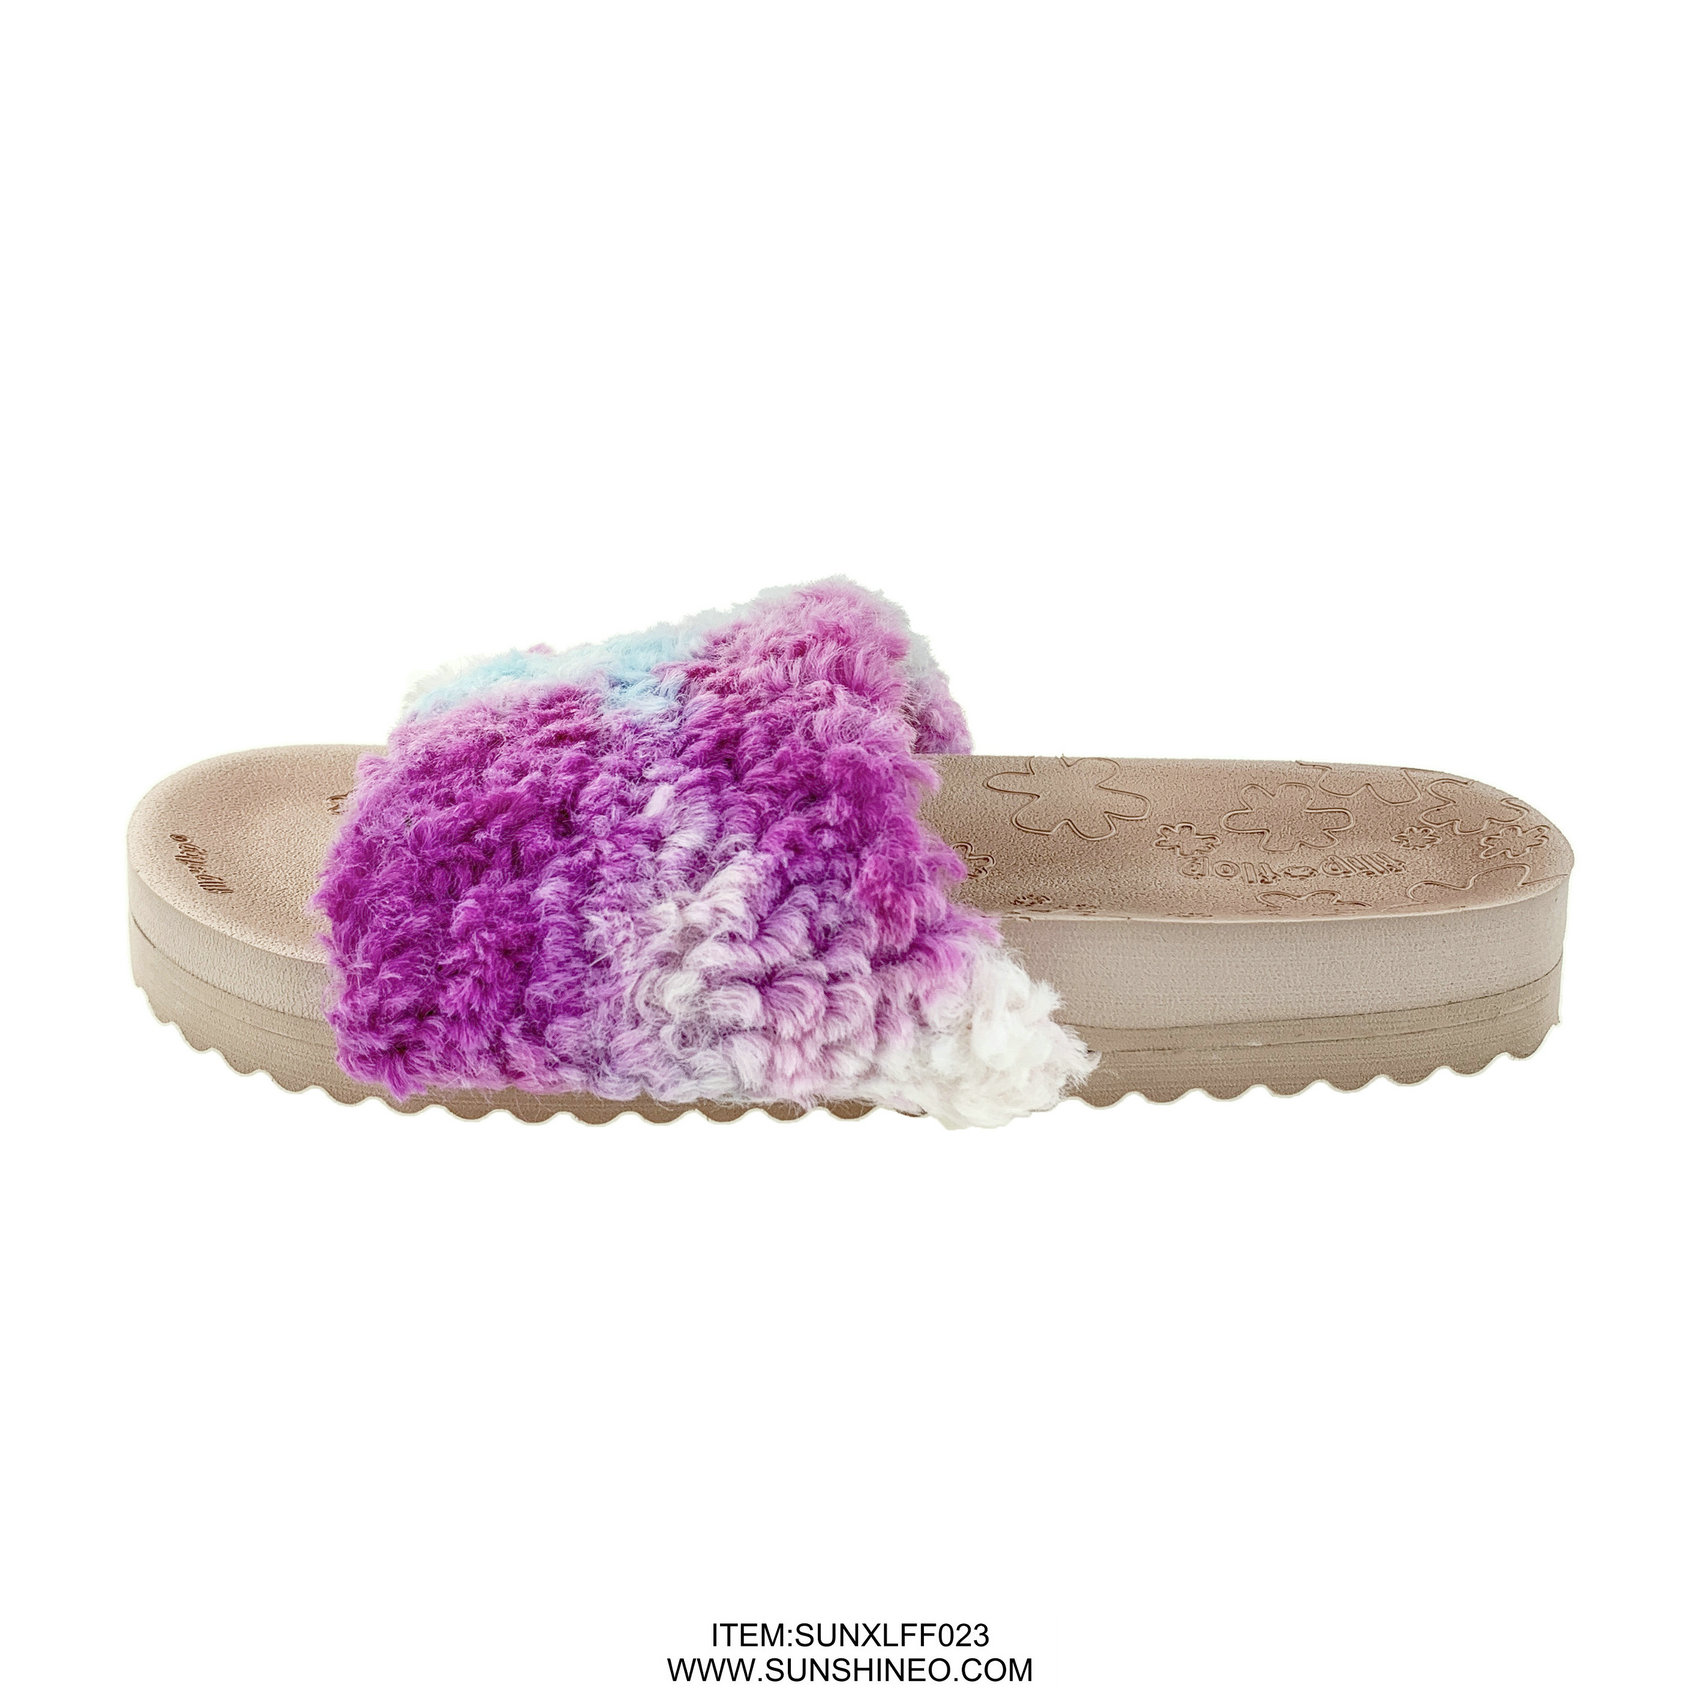 SUNXLFF023 fur flip flop sandals winter slippers